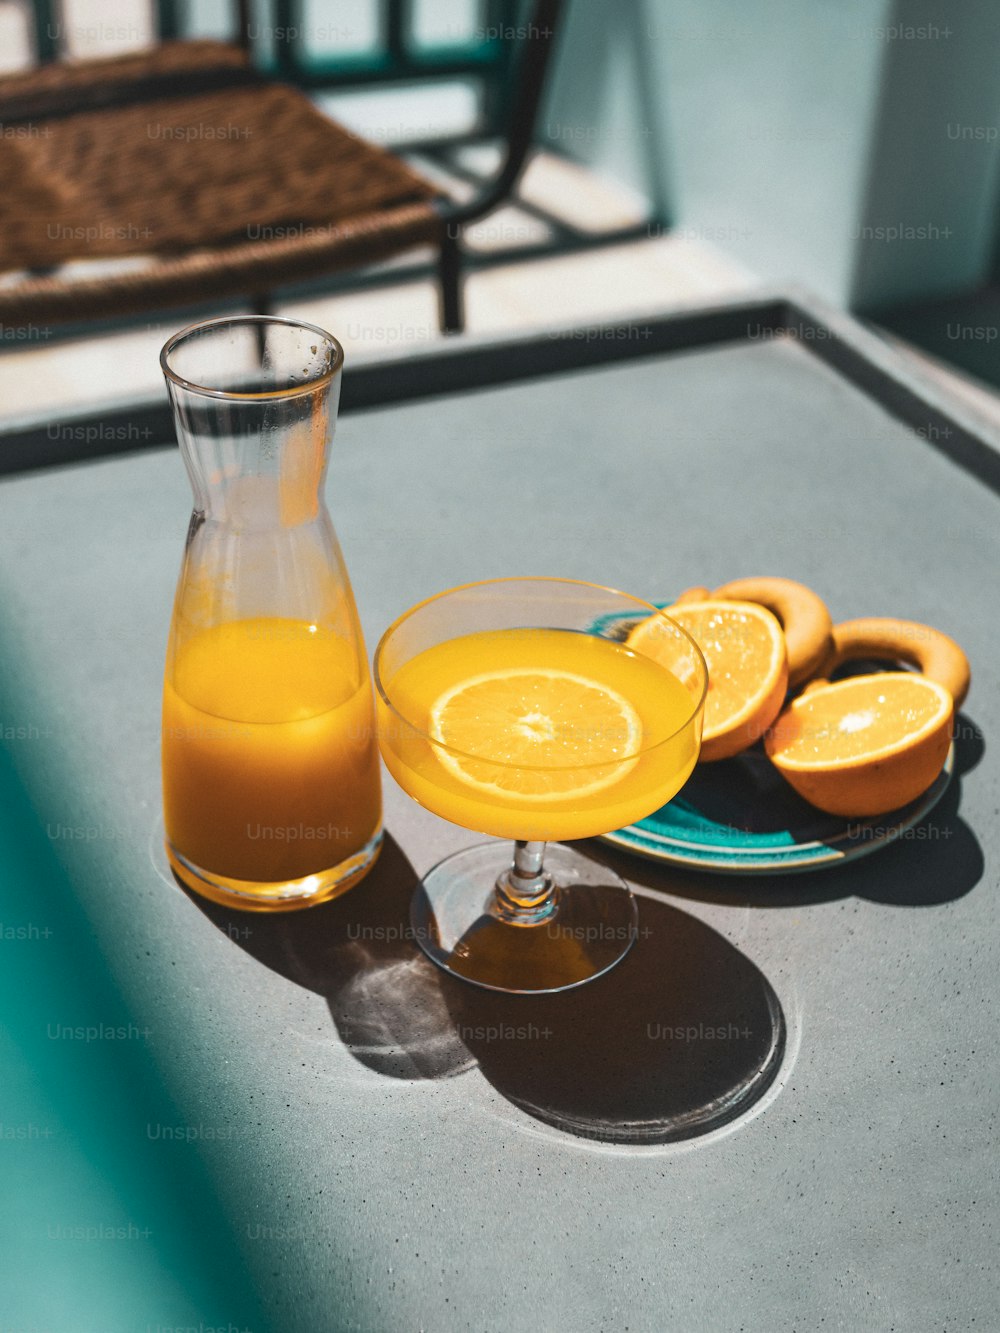 a glass of orange juice next to sliced oranges